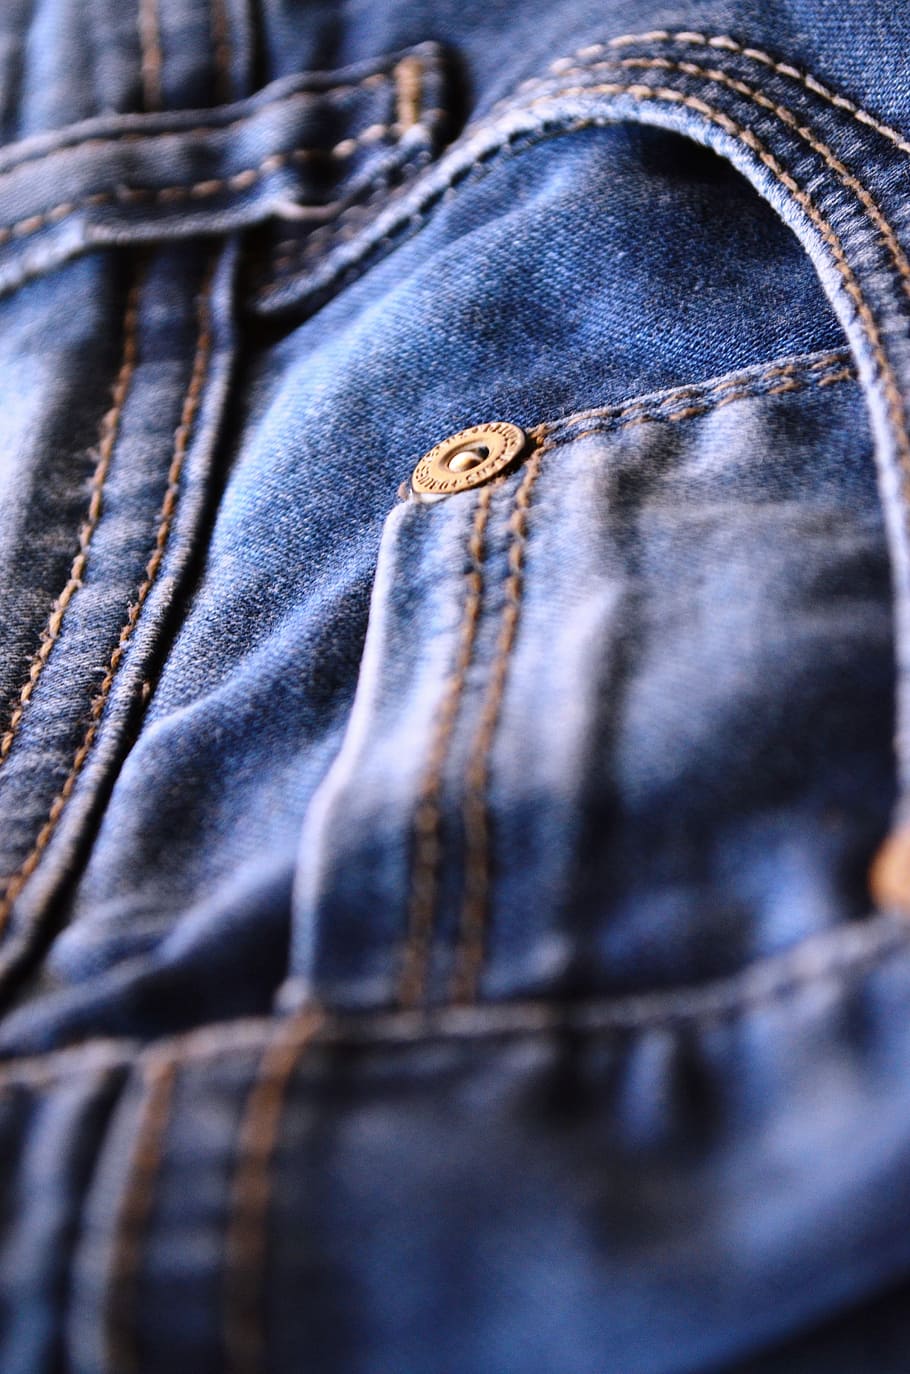 Jeans, Bolsillo, Moda, Ropa, azul, casual, denim, algodón, tela, pantalones